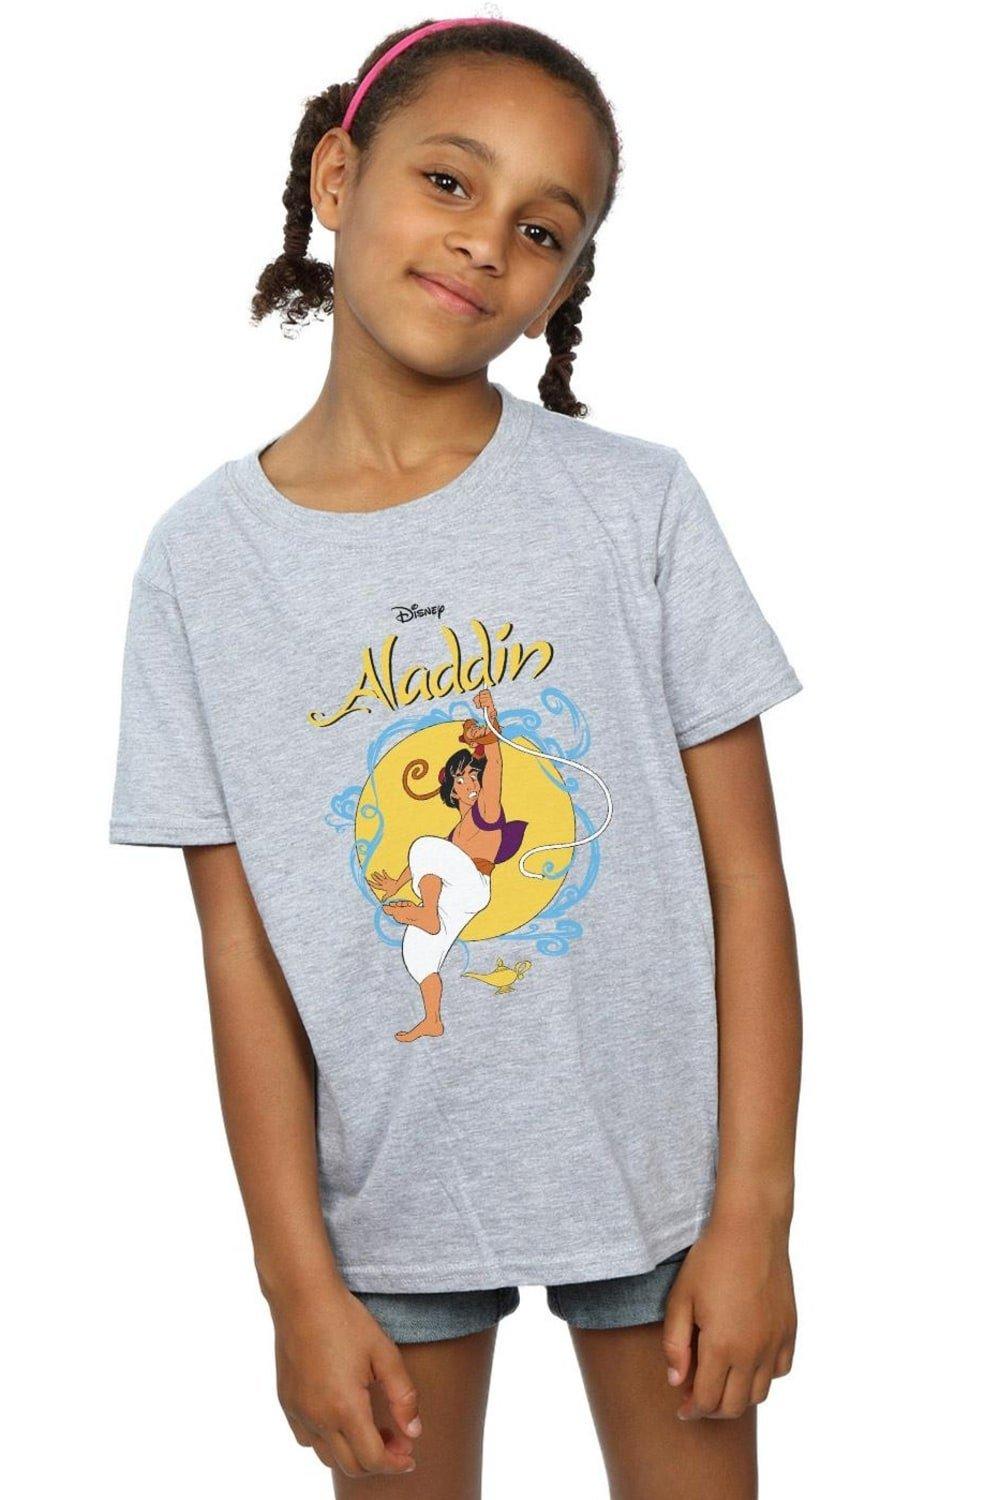 Aladdin Rope Swing Cotton T-Shirt